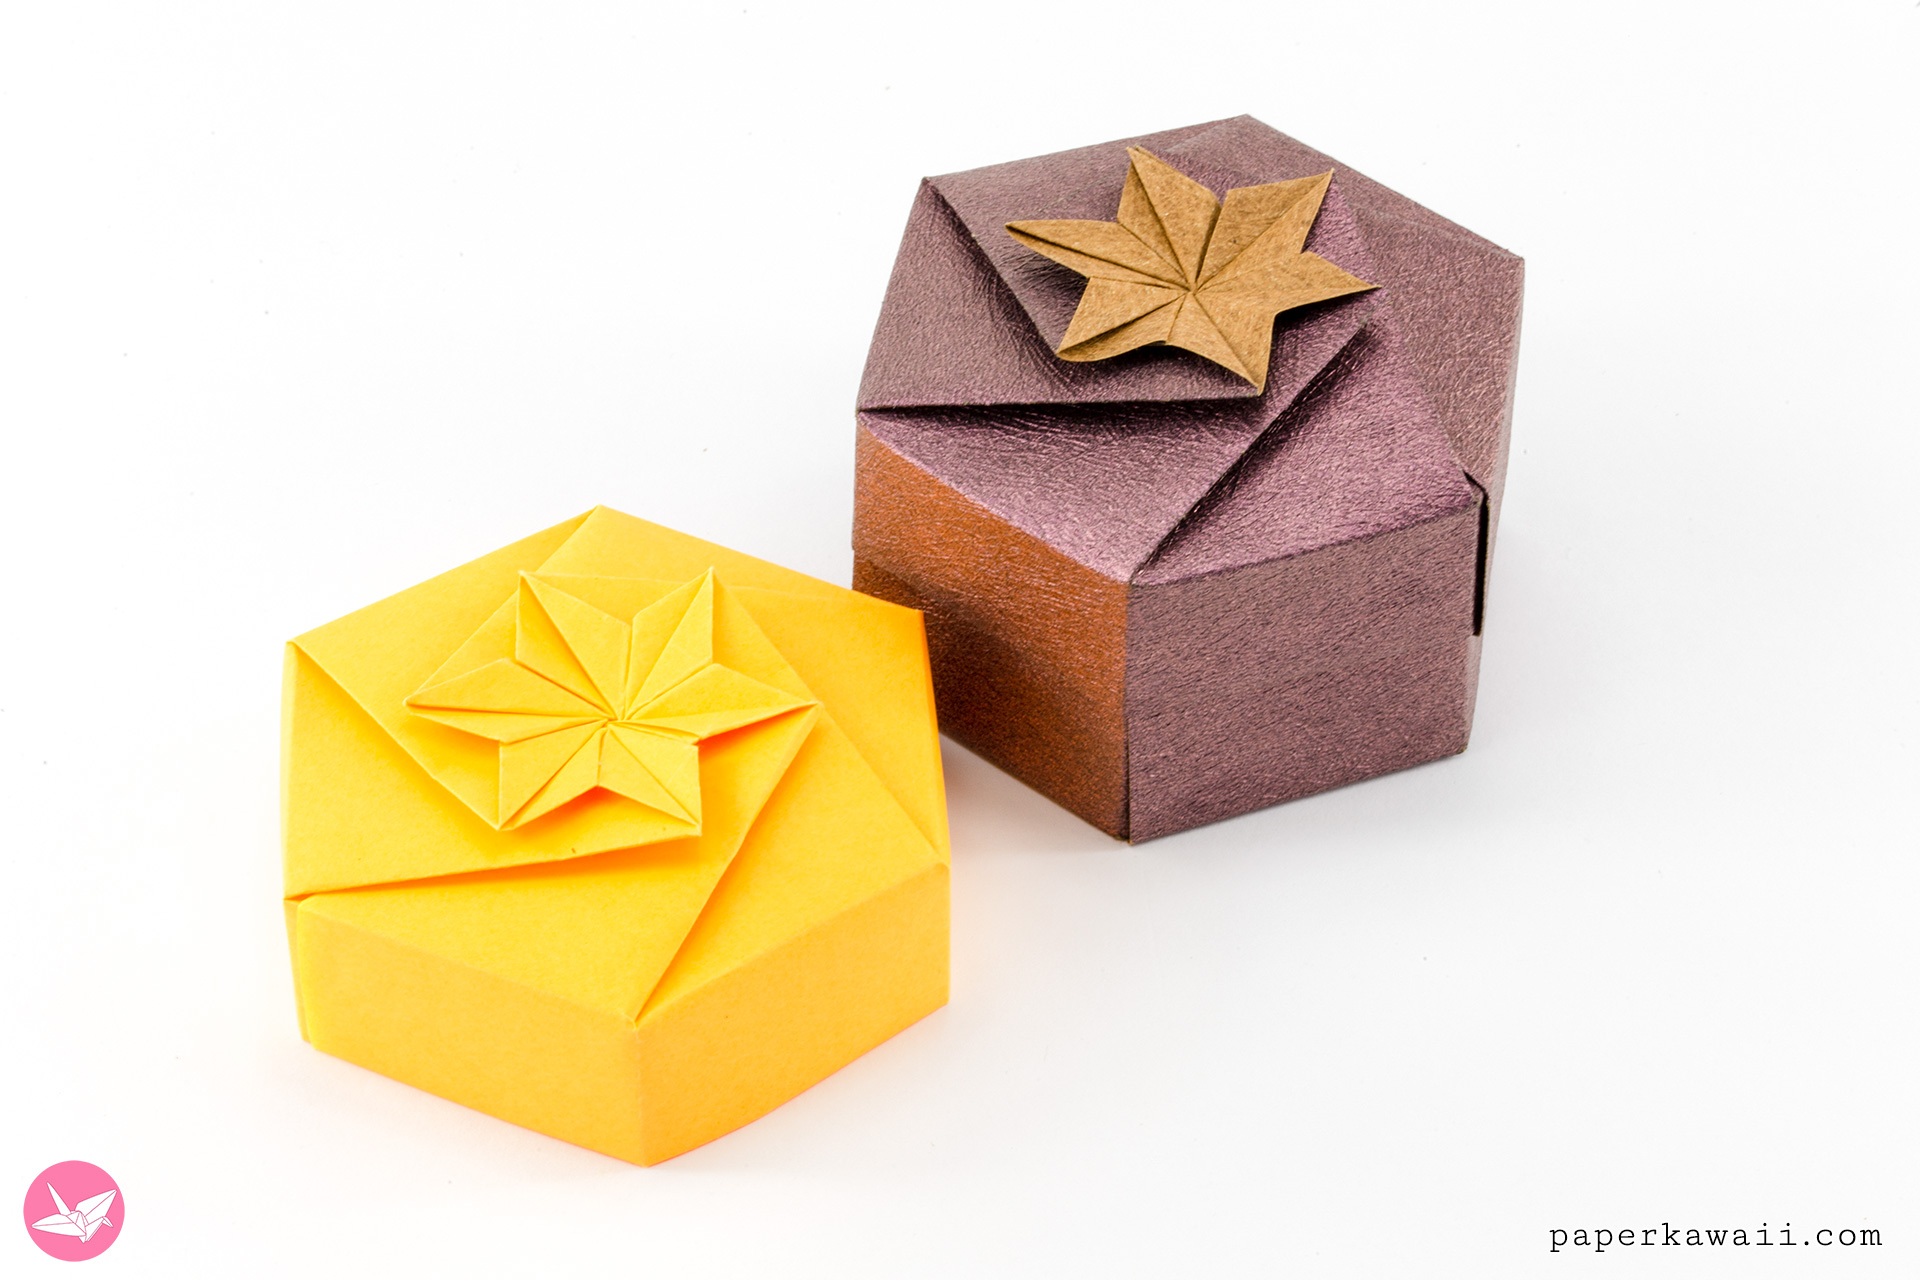 Useful Origami Instructions Origami Hexagonal Gift Box Tutorial Paper Kawaii